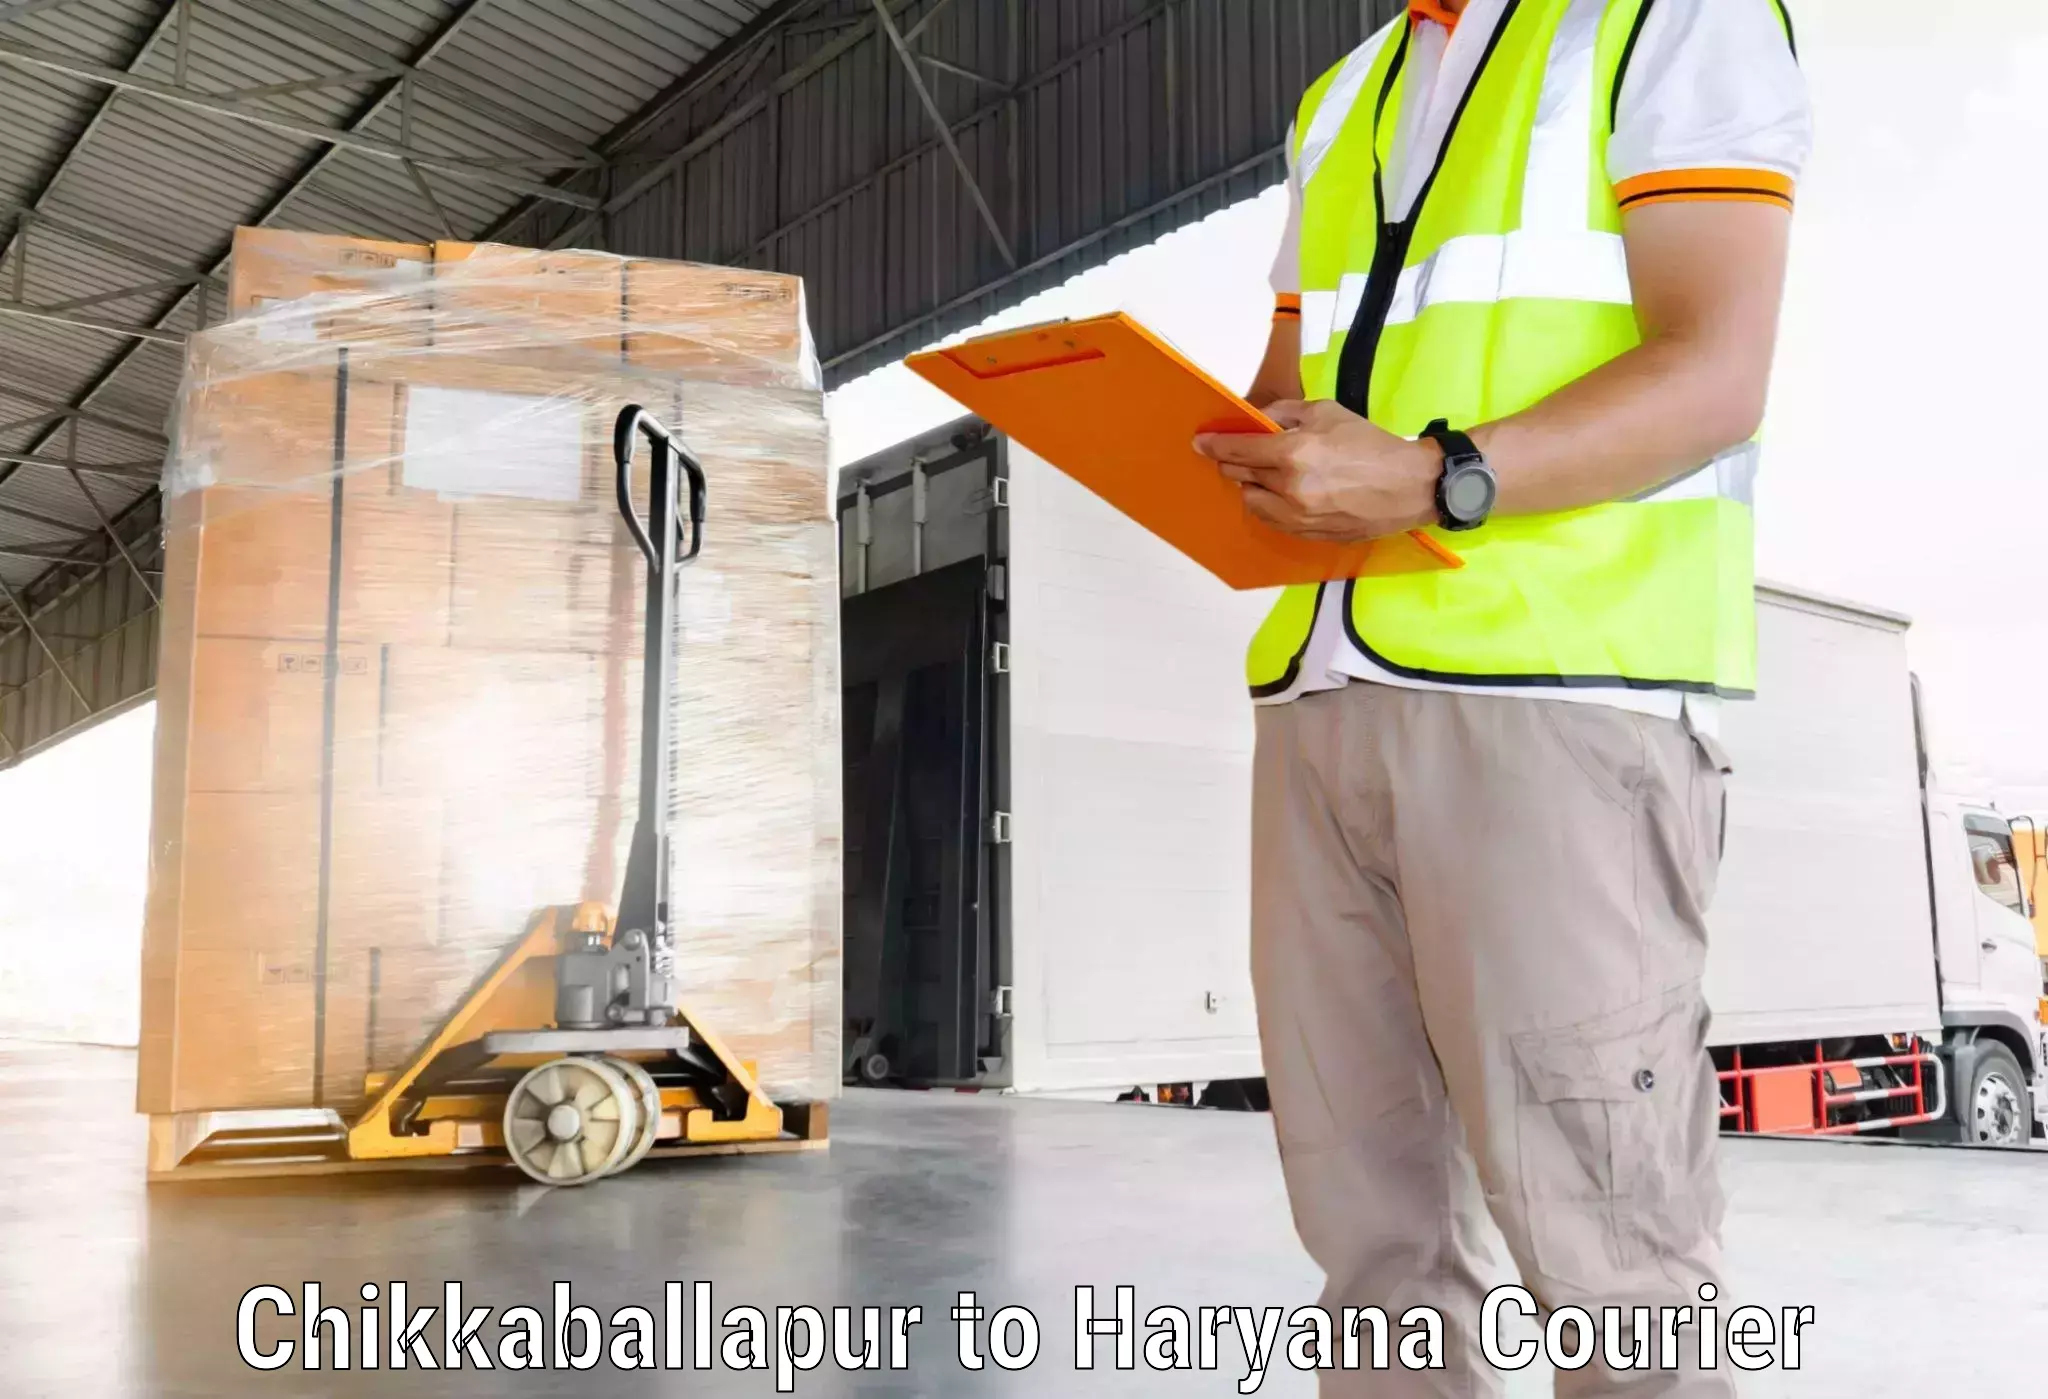 Package delivery network Chikkaballapur to Rewari